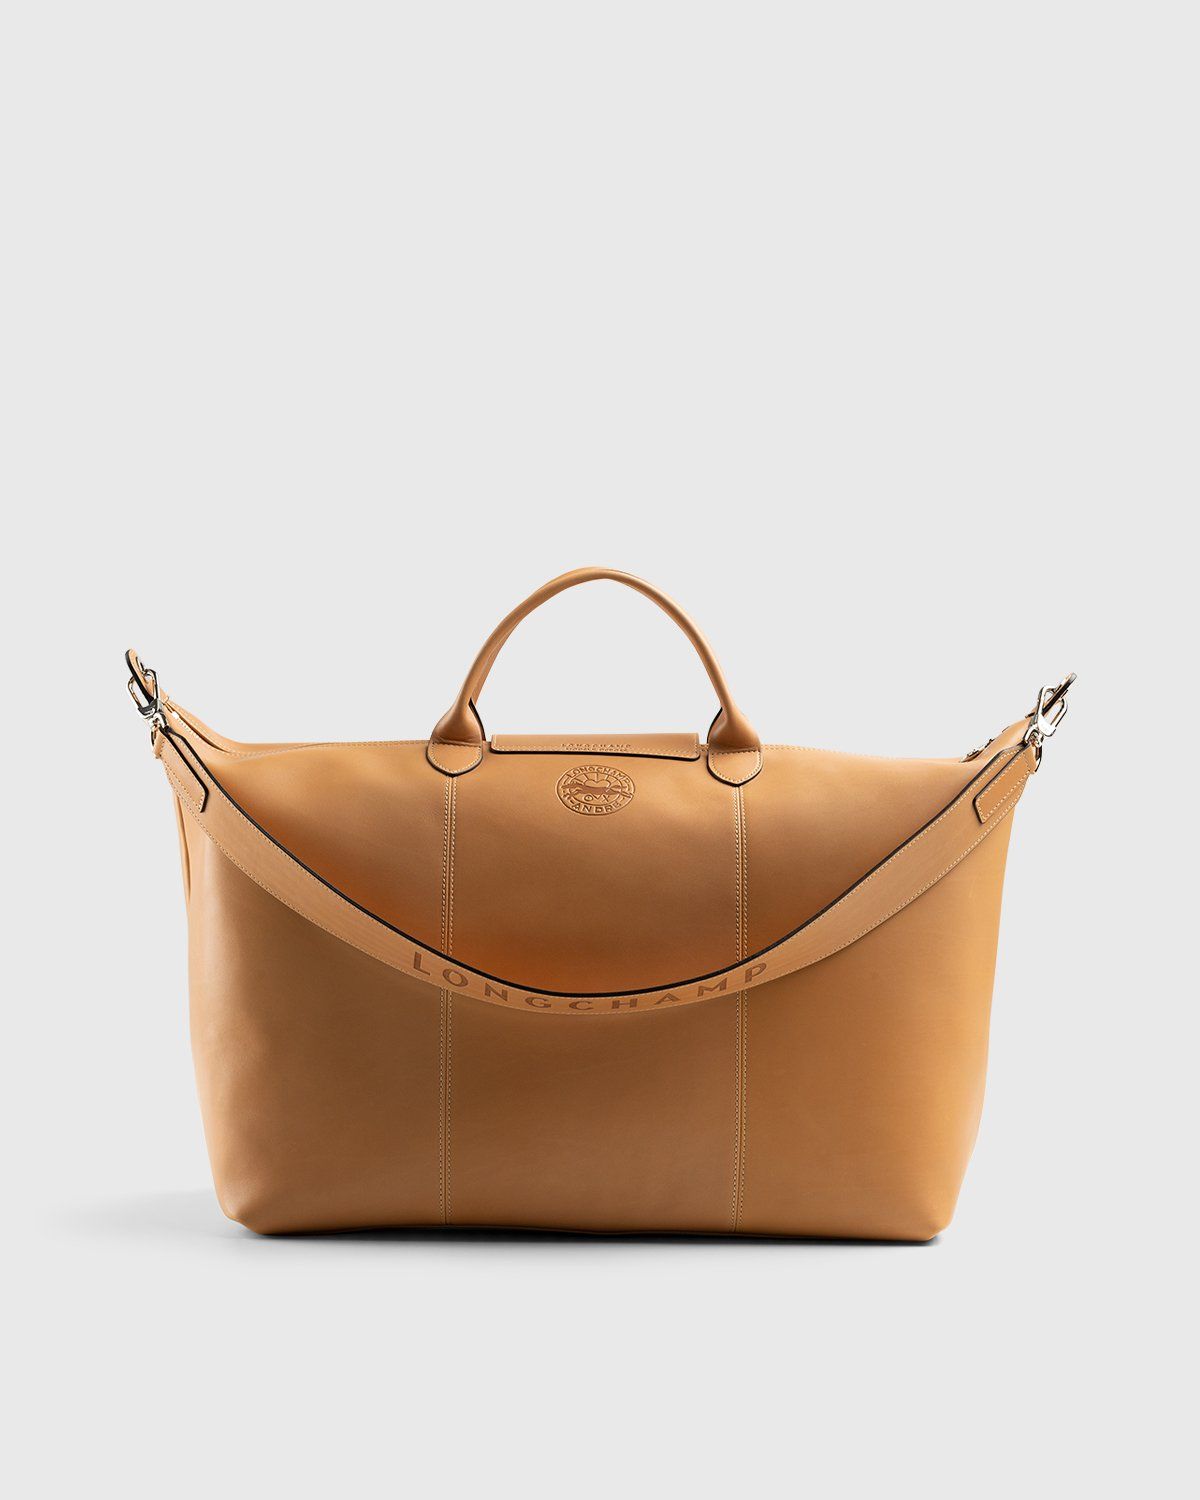 NEW w/dustbag Longchamp Le Pliage Cuir Leather Tote Pink Medium Handbag  Foldable